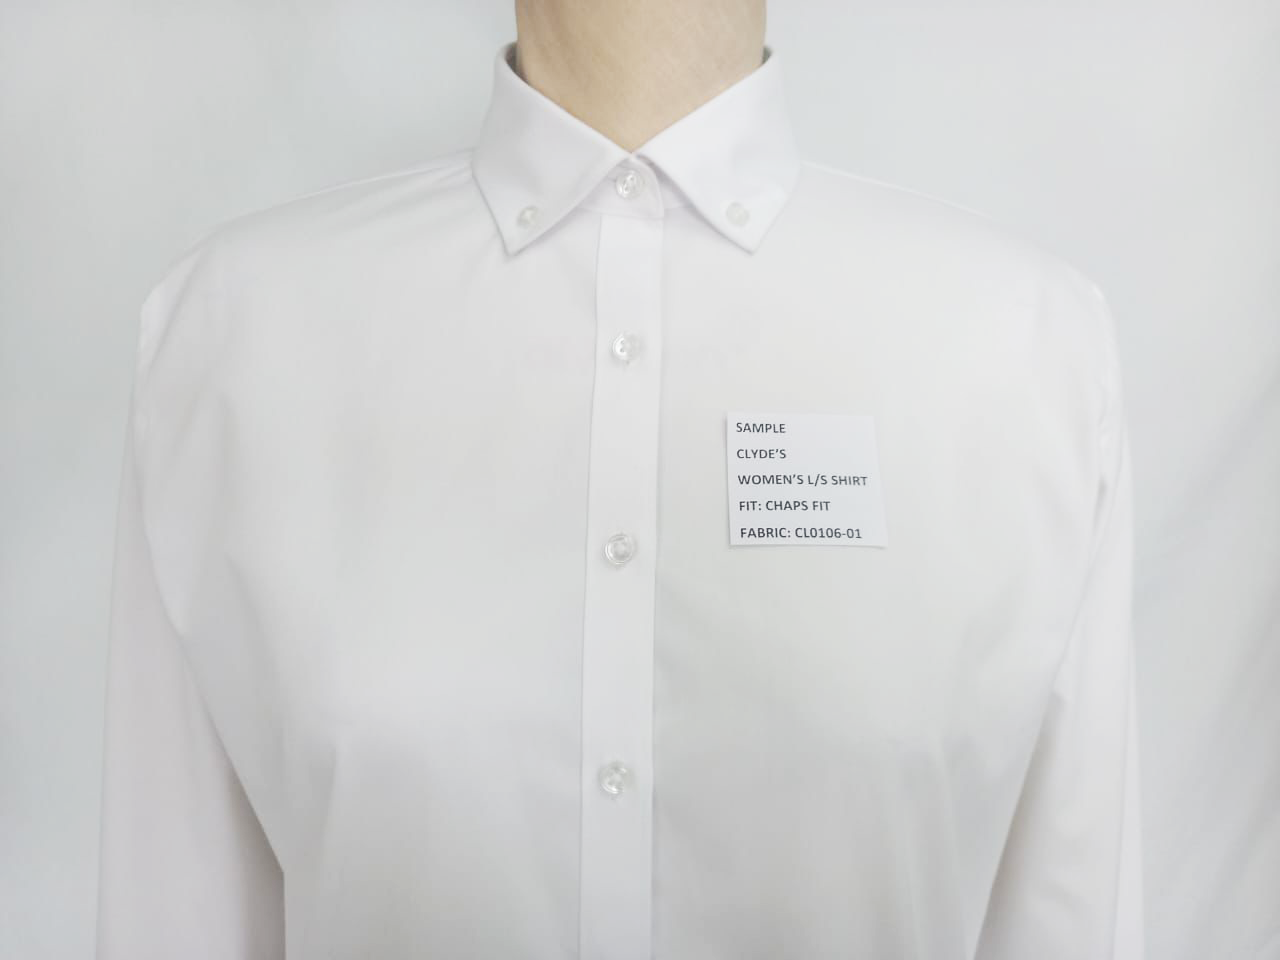 Women’s Classic White Shirt for Clyde's Restaurant Group